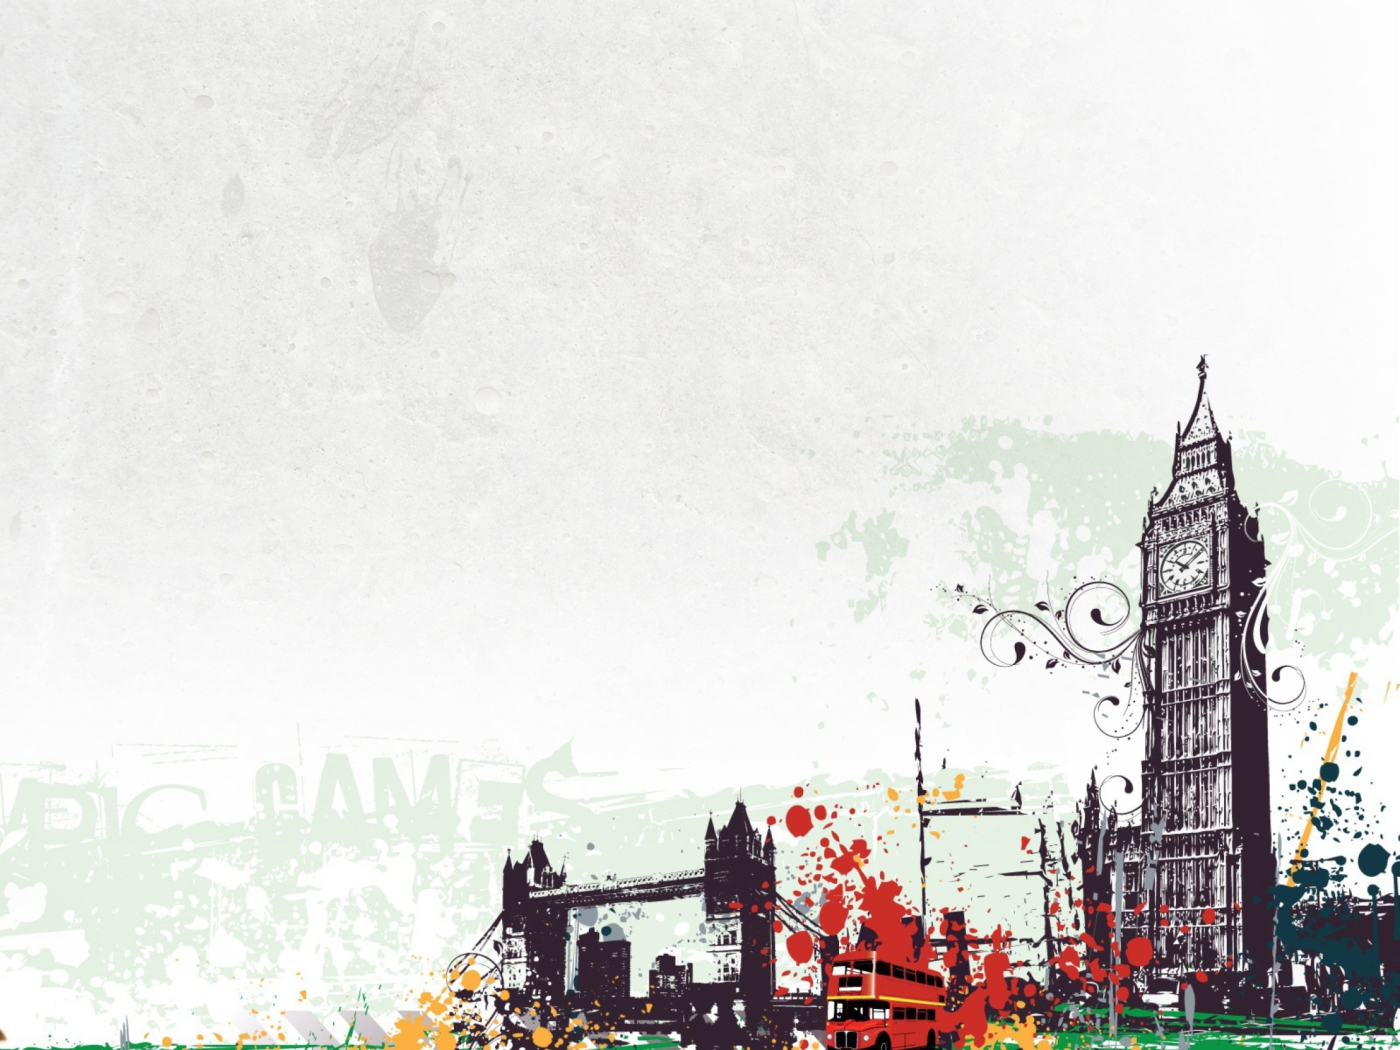 2012 London Olympic Games wallpaper 1400x1050